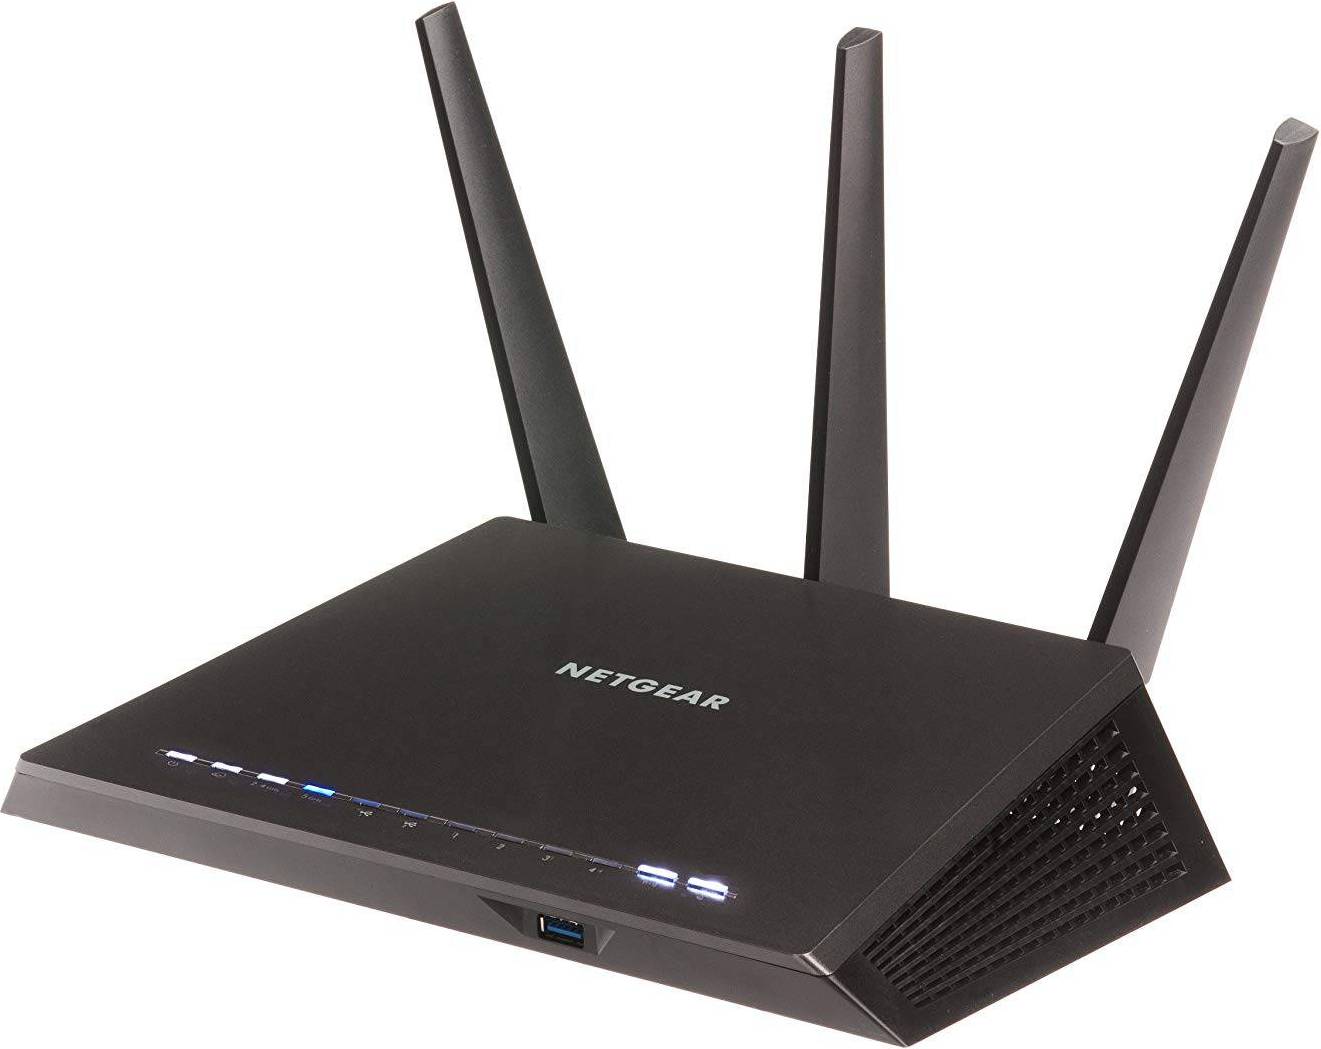  Bild på Netgear R7000 router